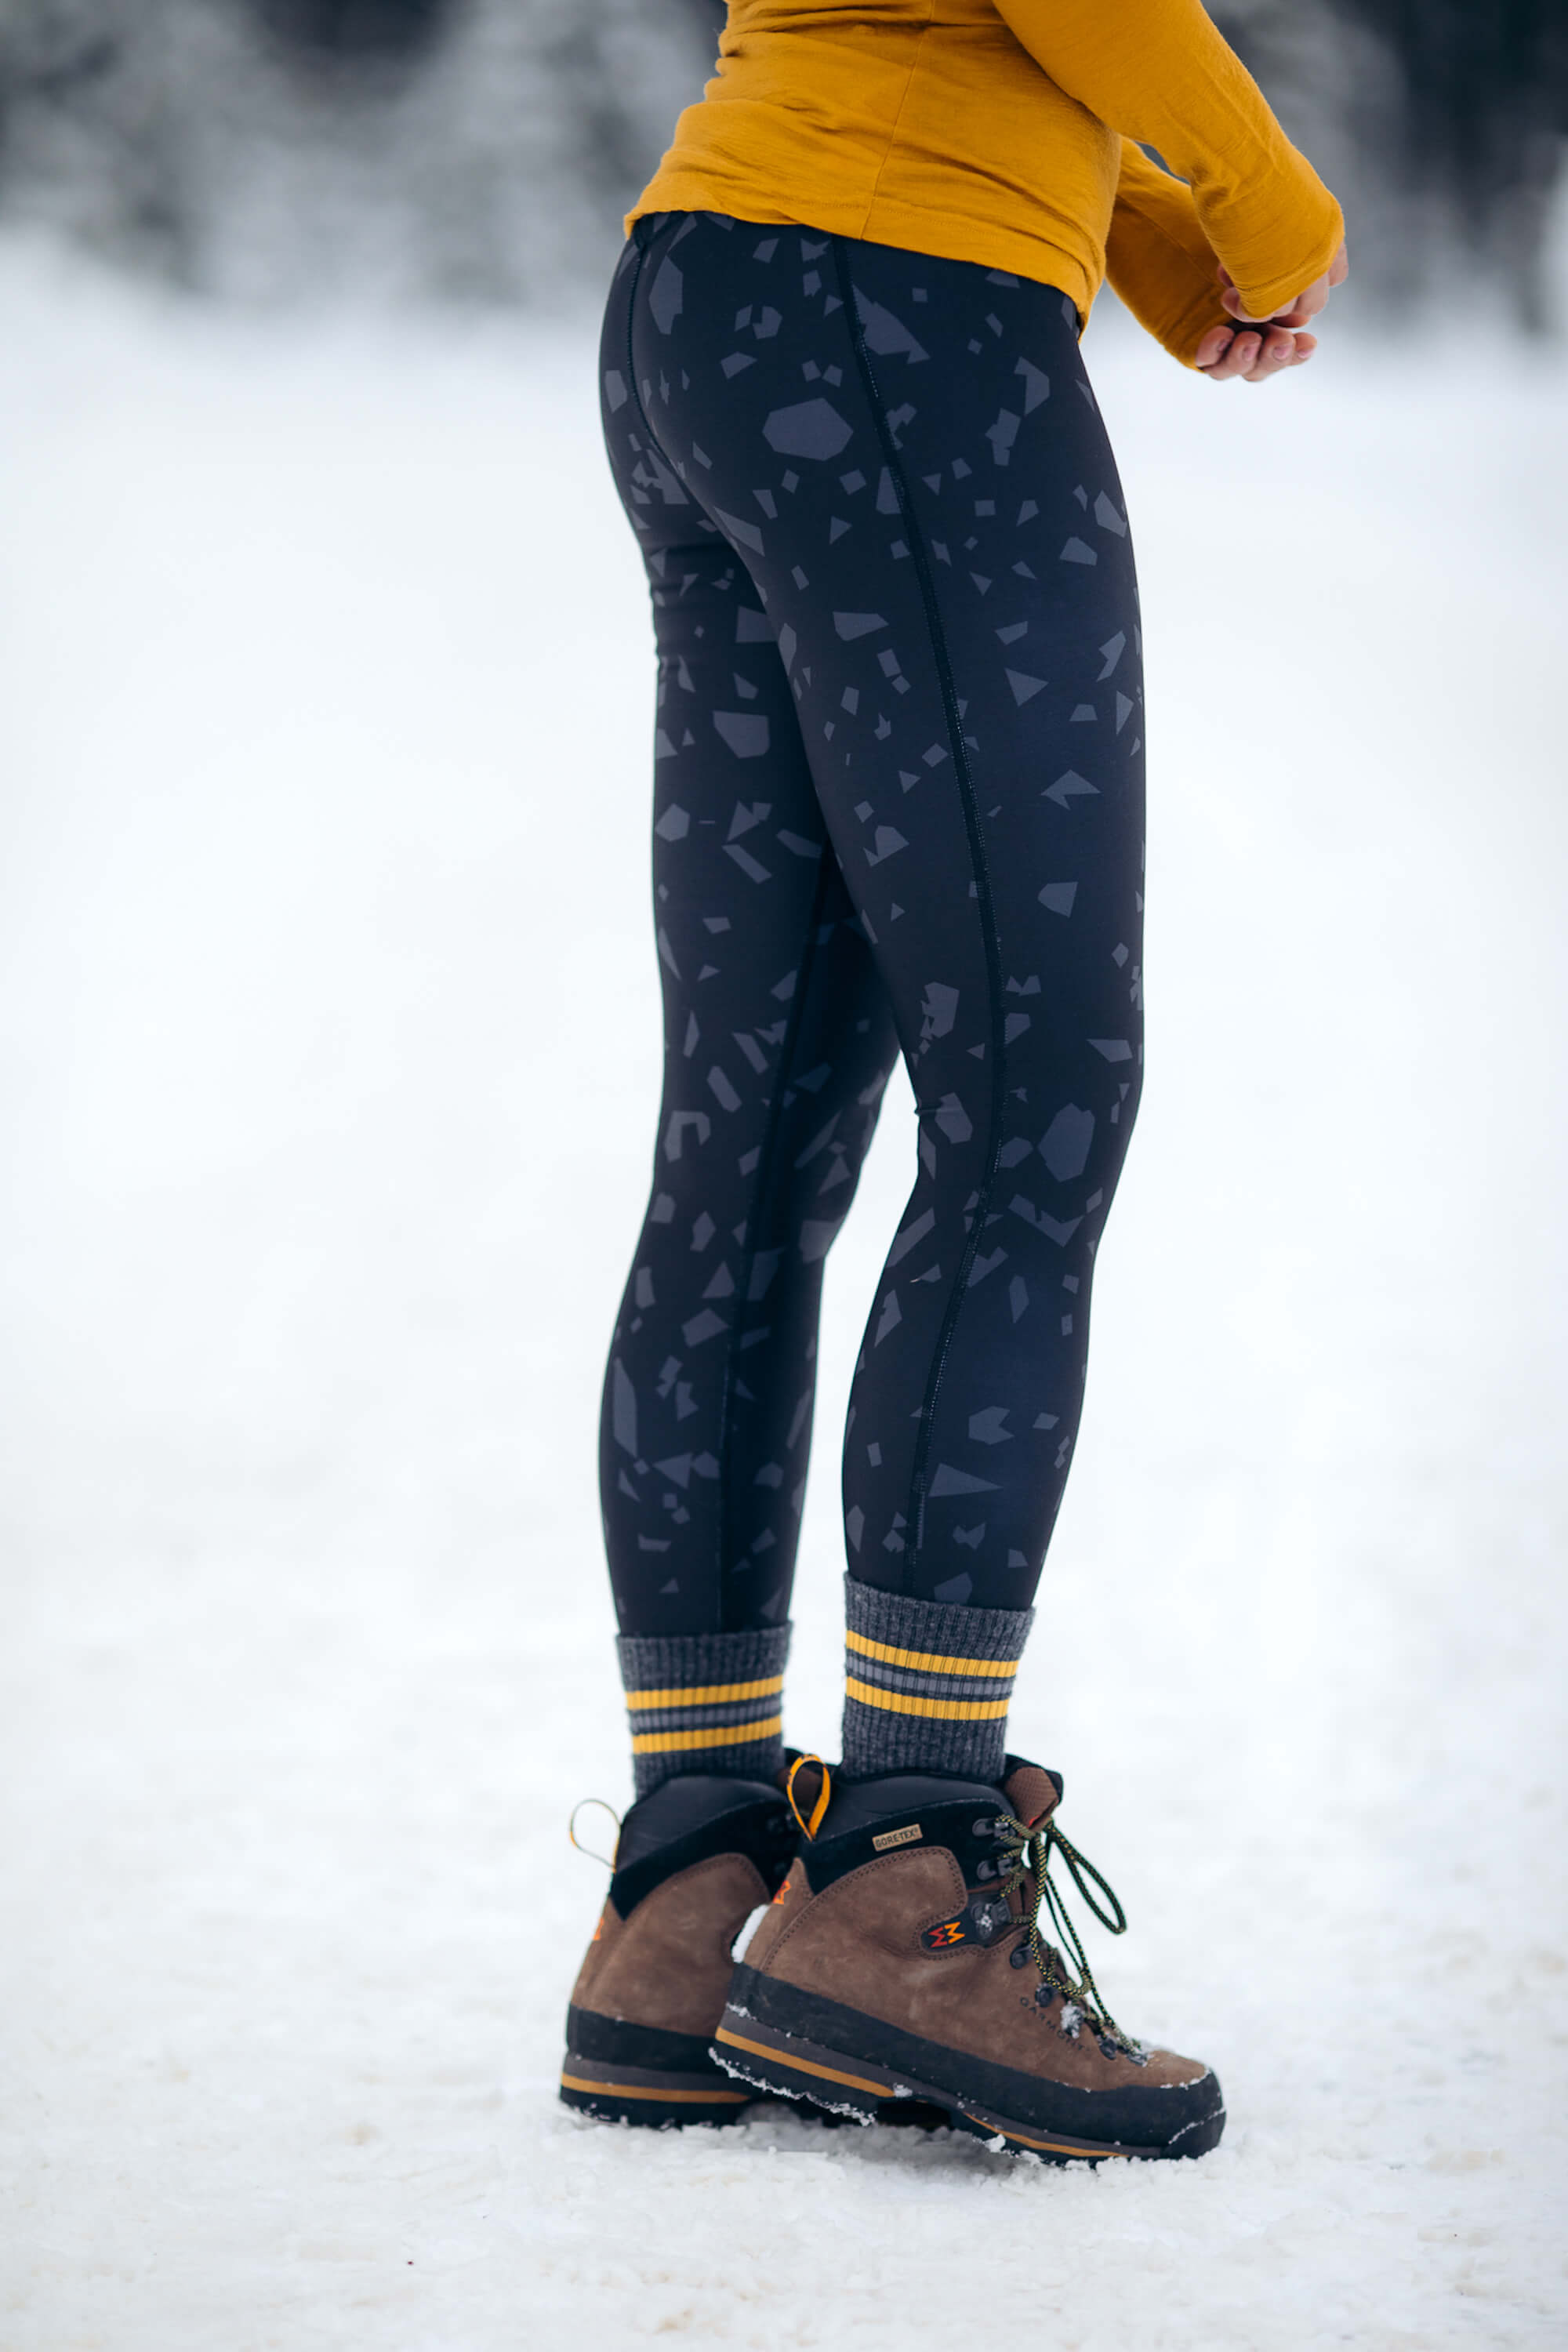  Winter Light Breathable Clothing Pants Sport Leggings